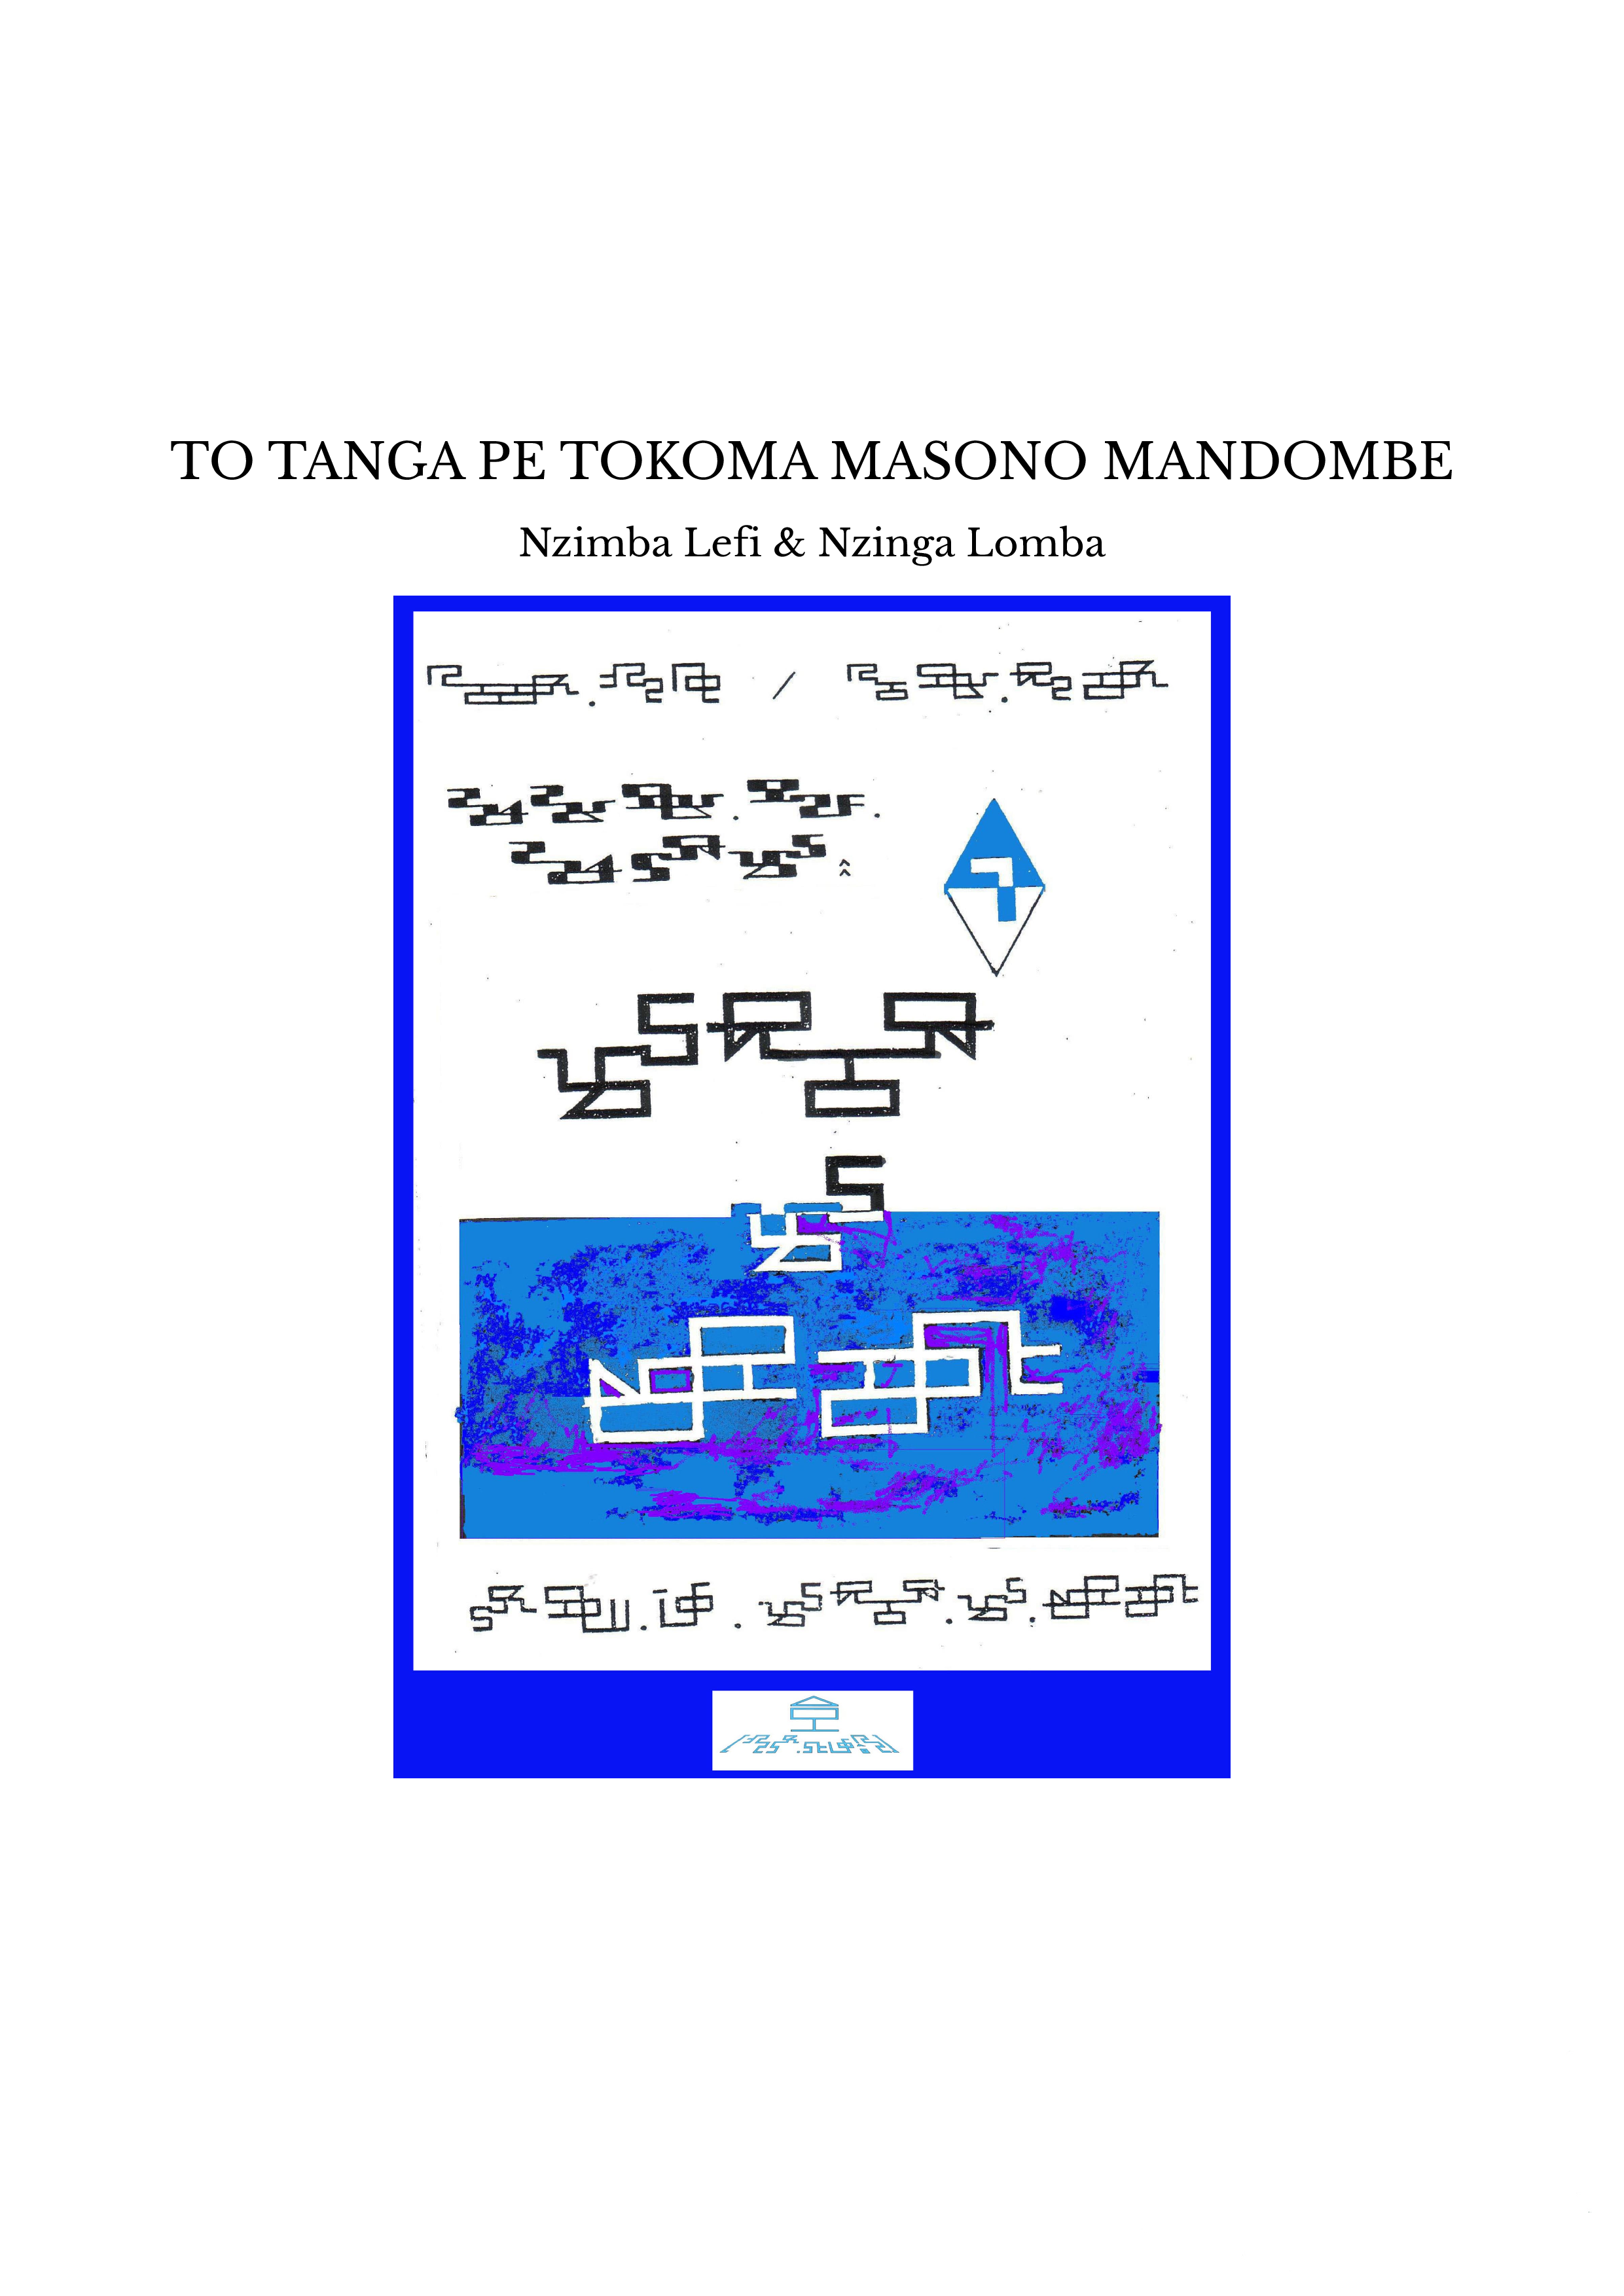 TO TANGA PE TOKOMA MASONO MANDOMBE